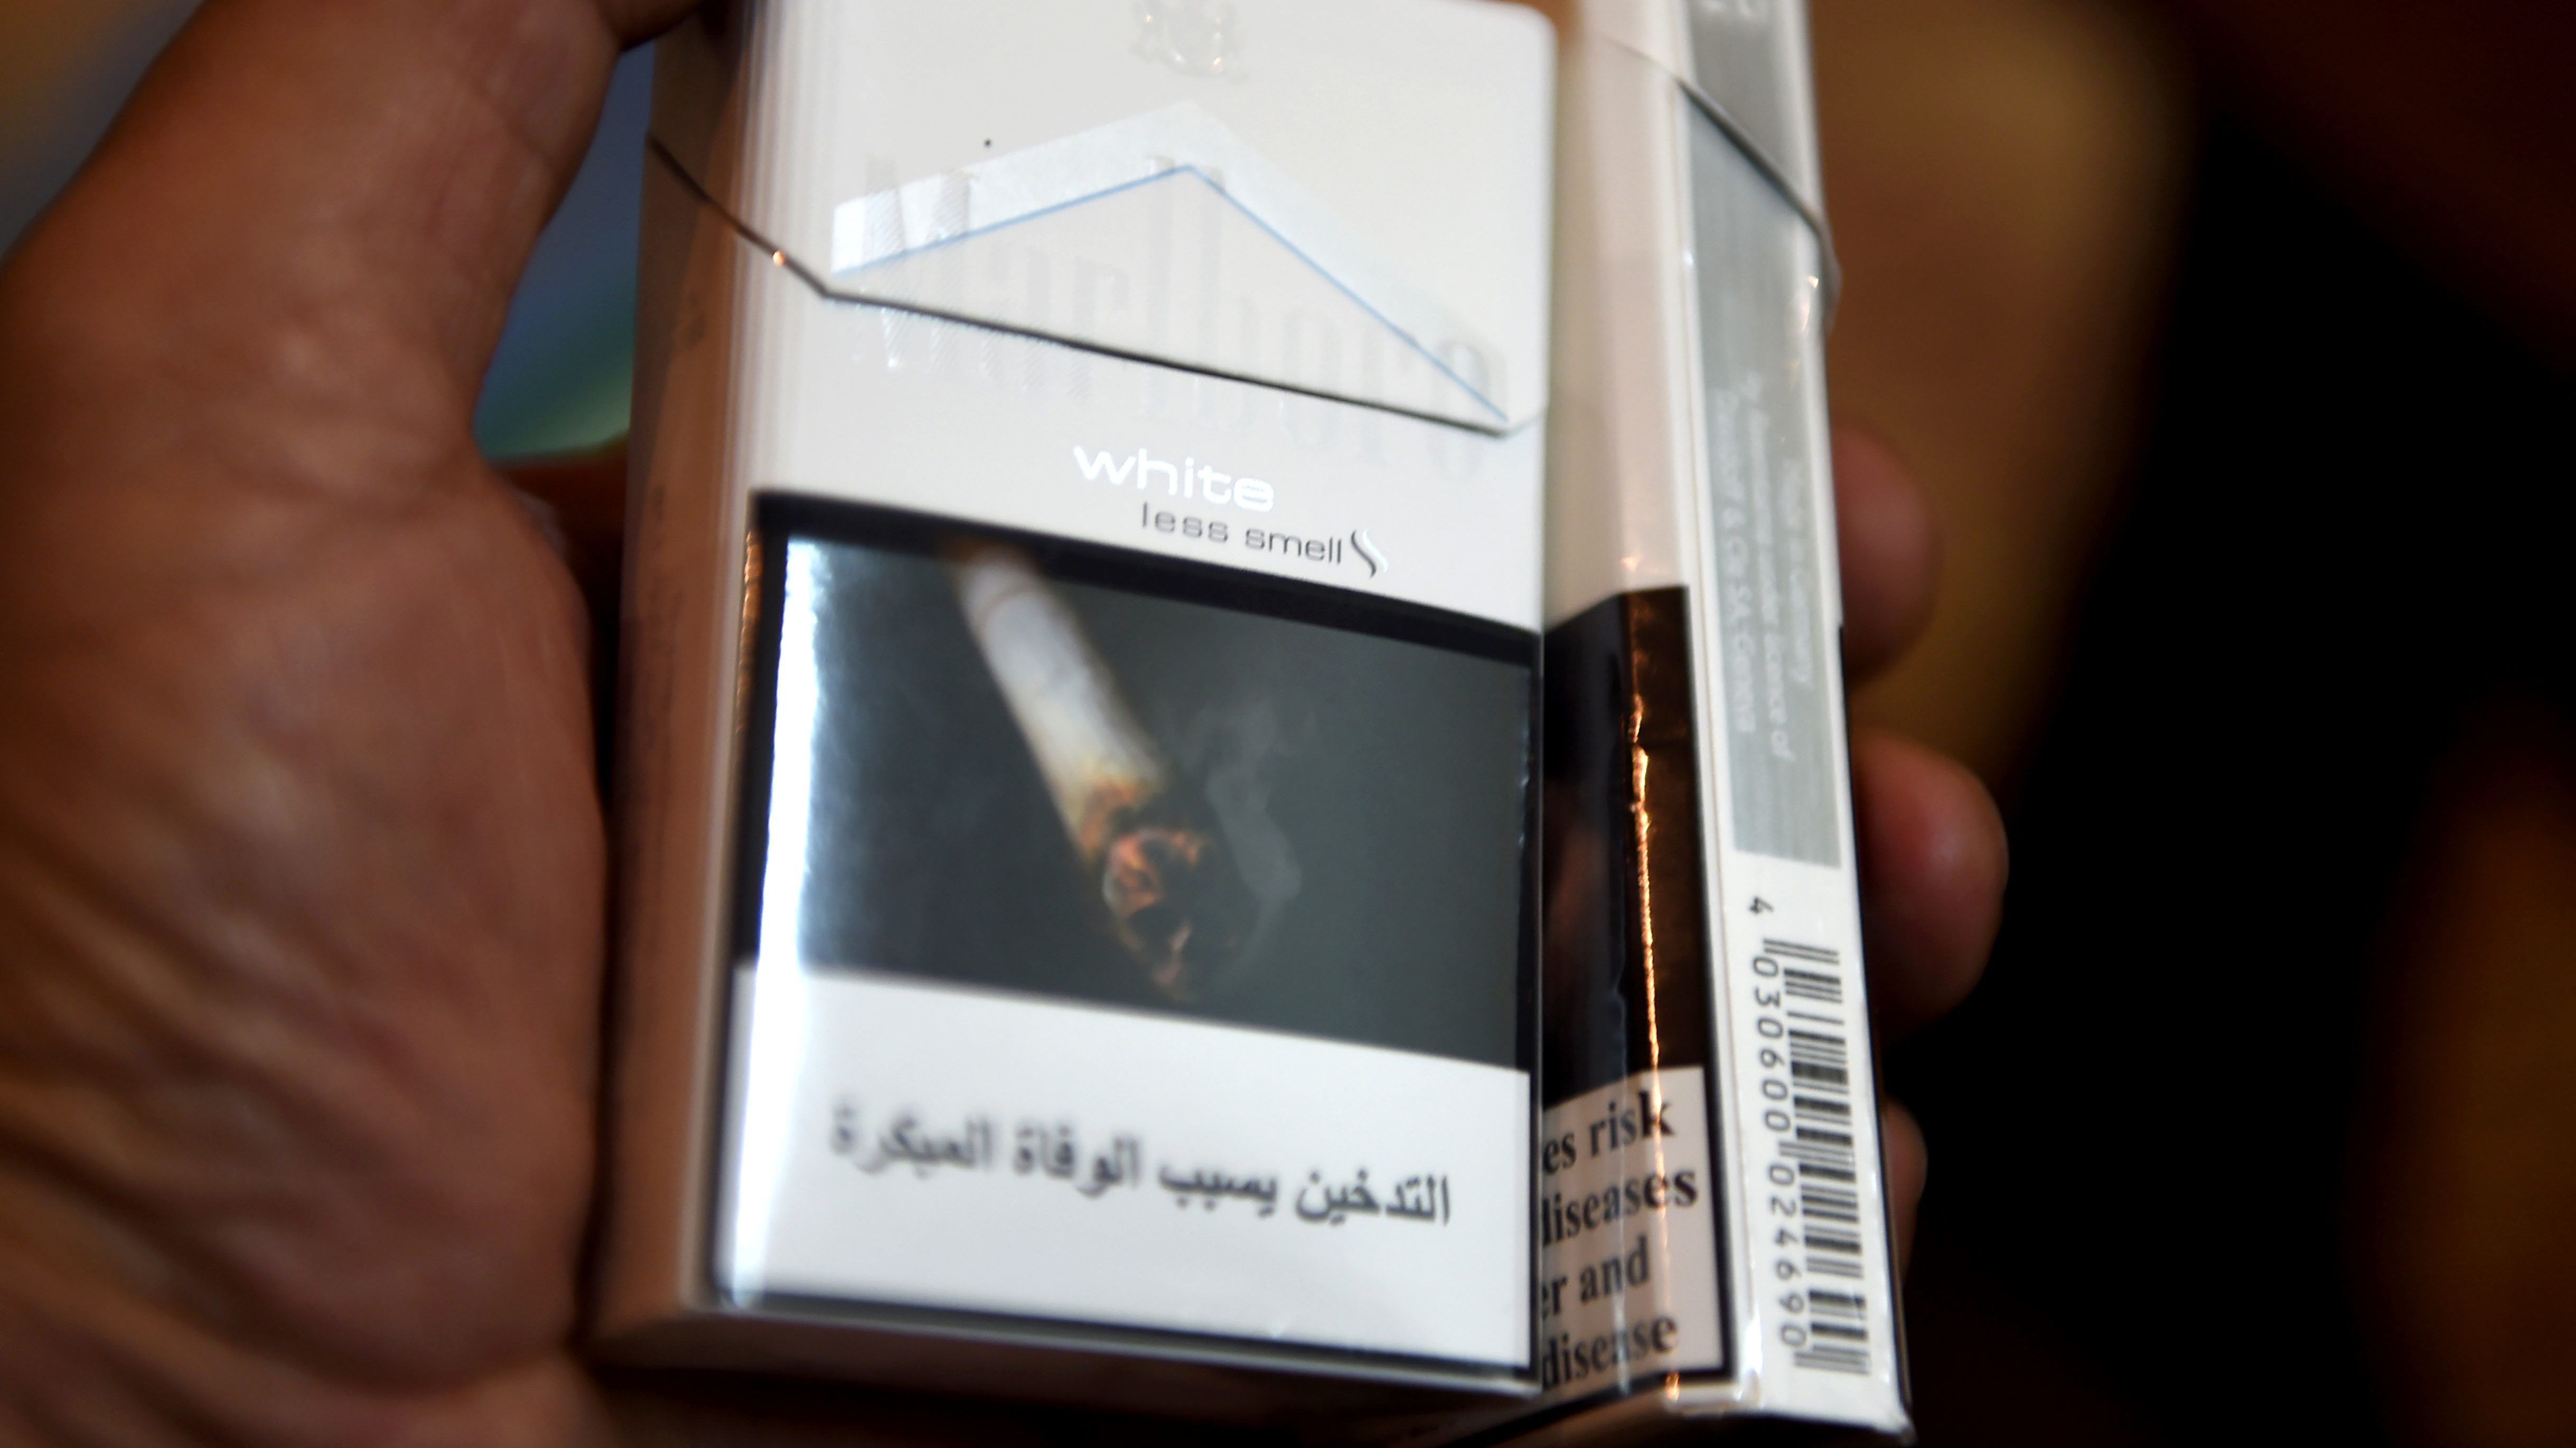 Fake Cigarettes Spark Outcry in Saudi Arabia